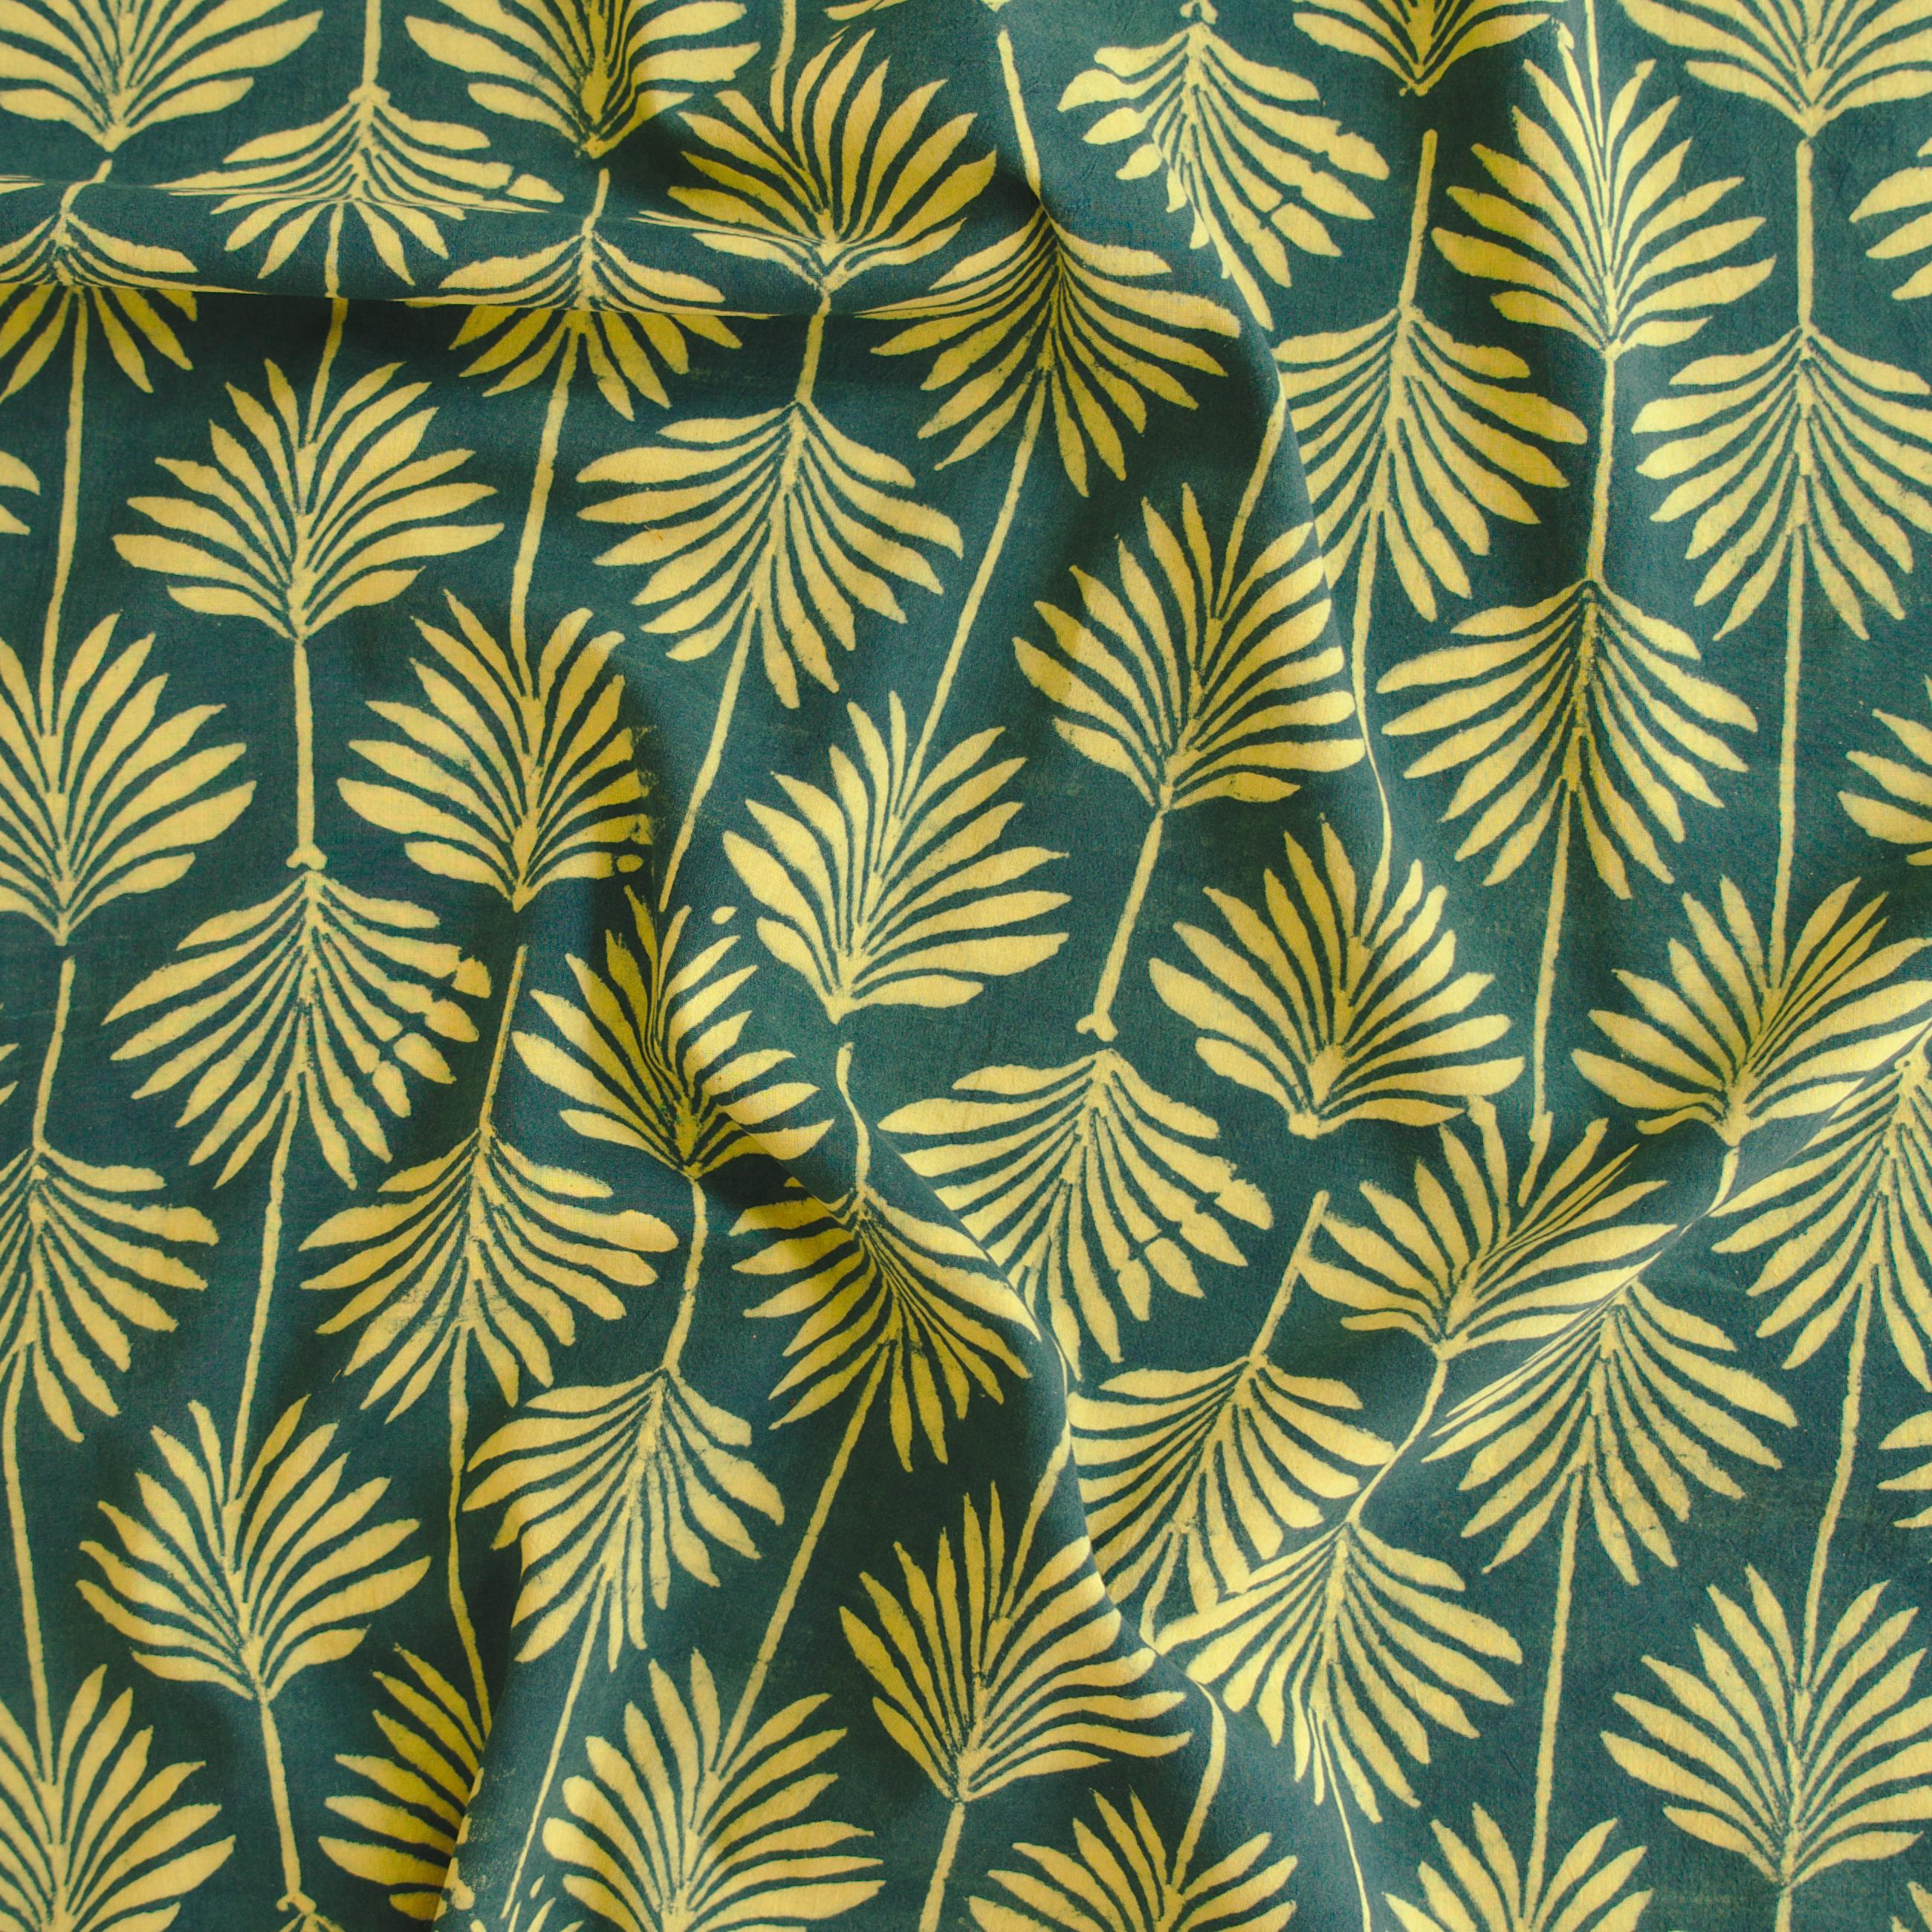 2 - SIK48 - Hand Block-Printed Cotton - Negril Palm Design - Green & Yellow Dye - Contrast